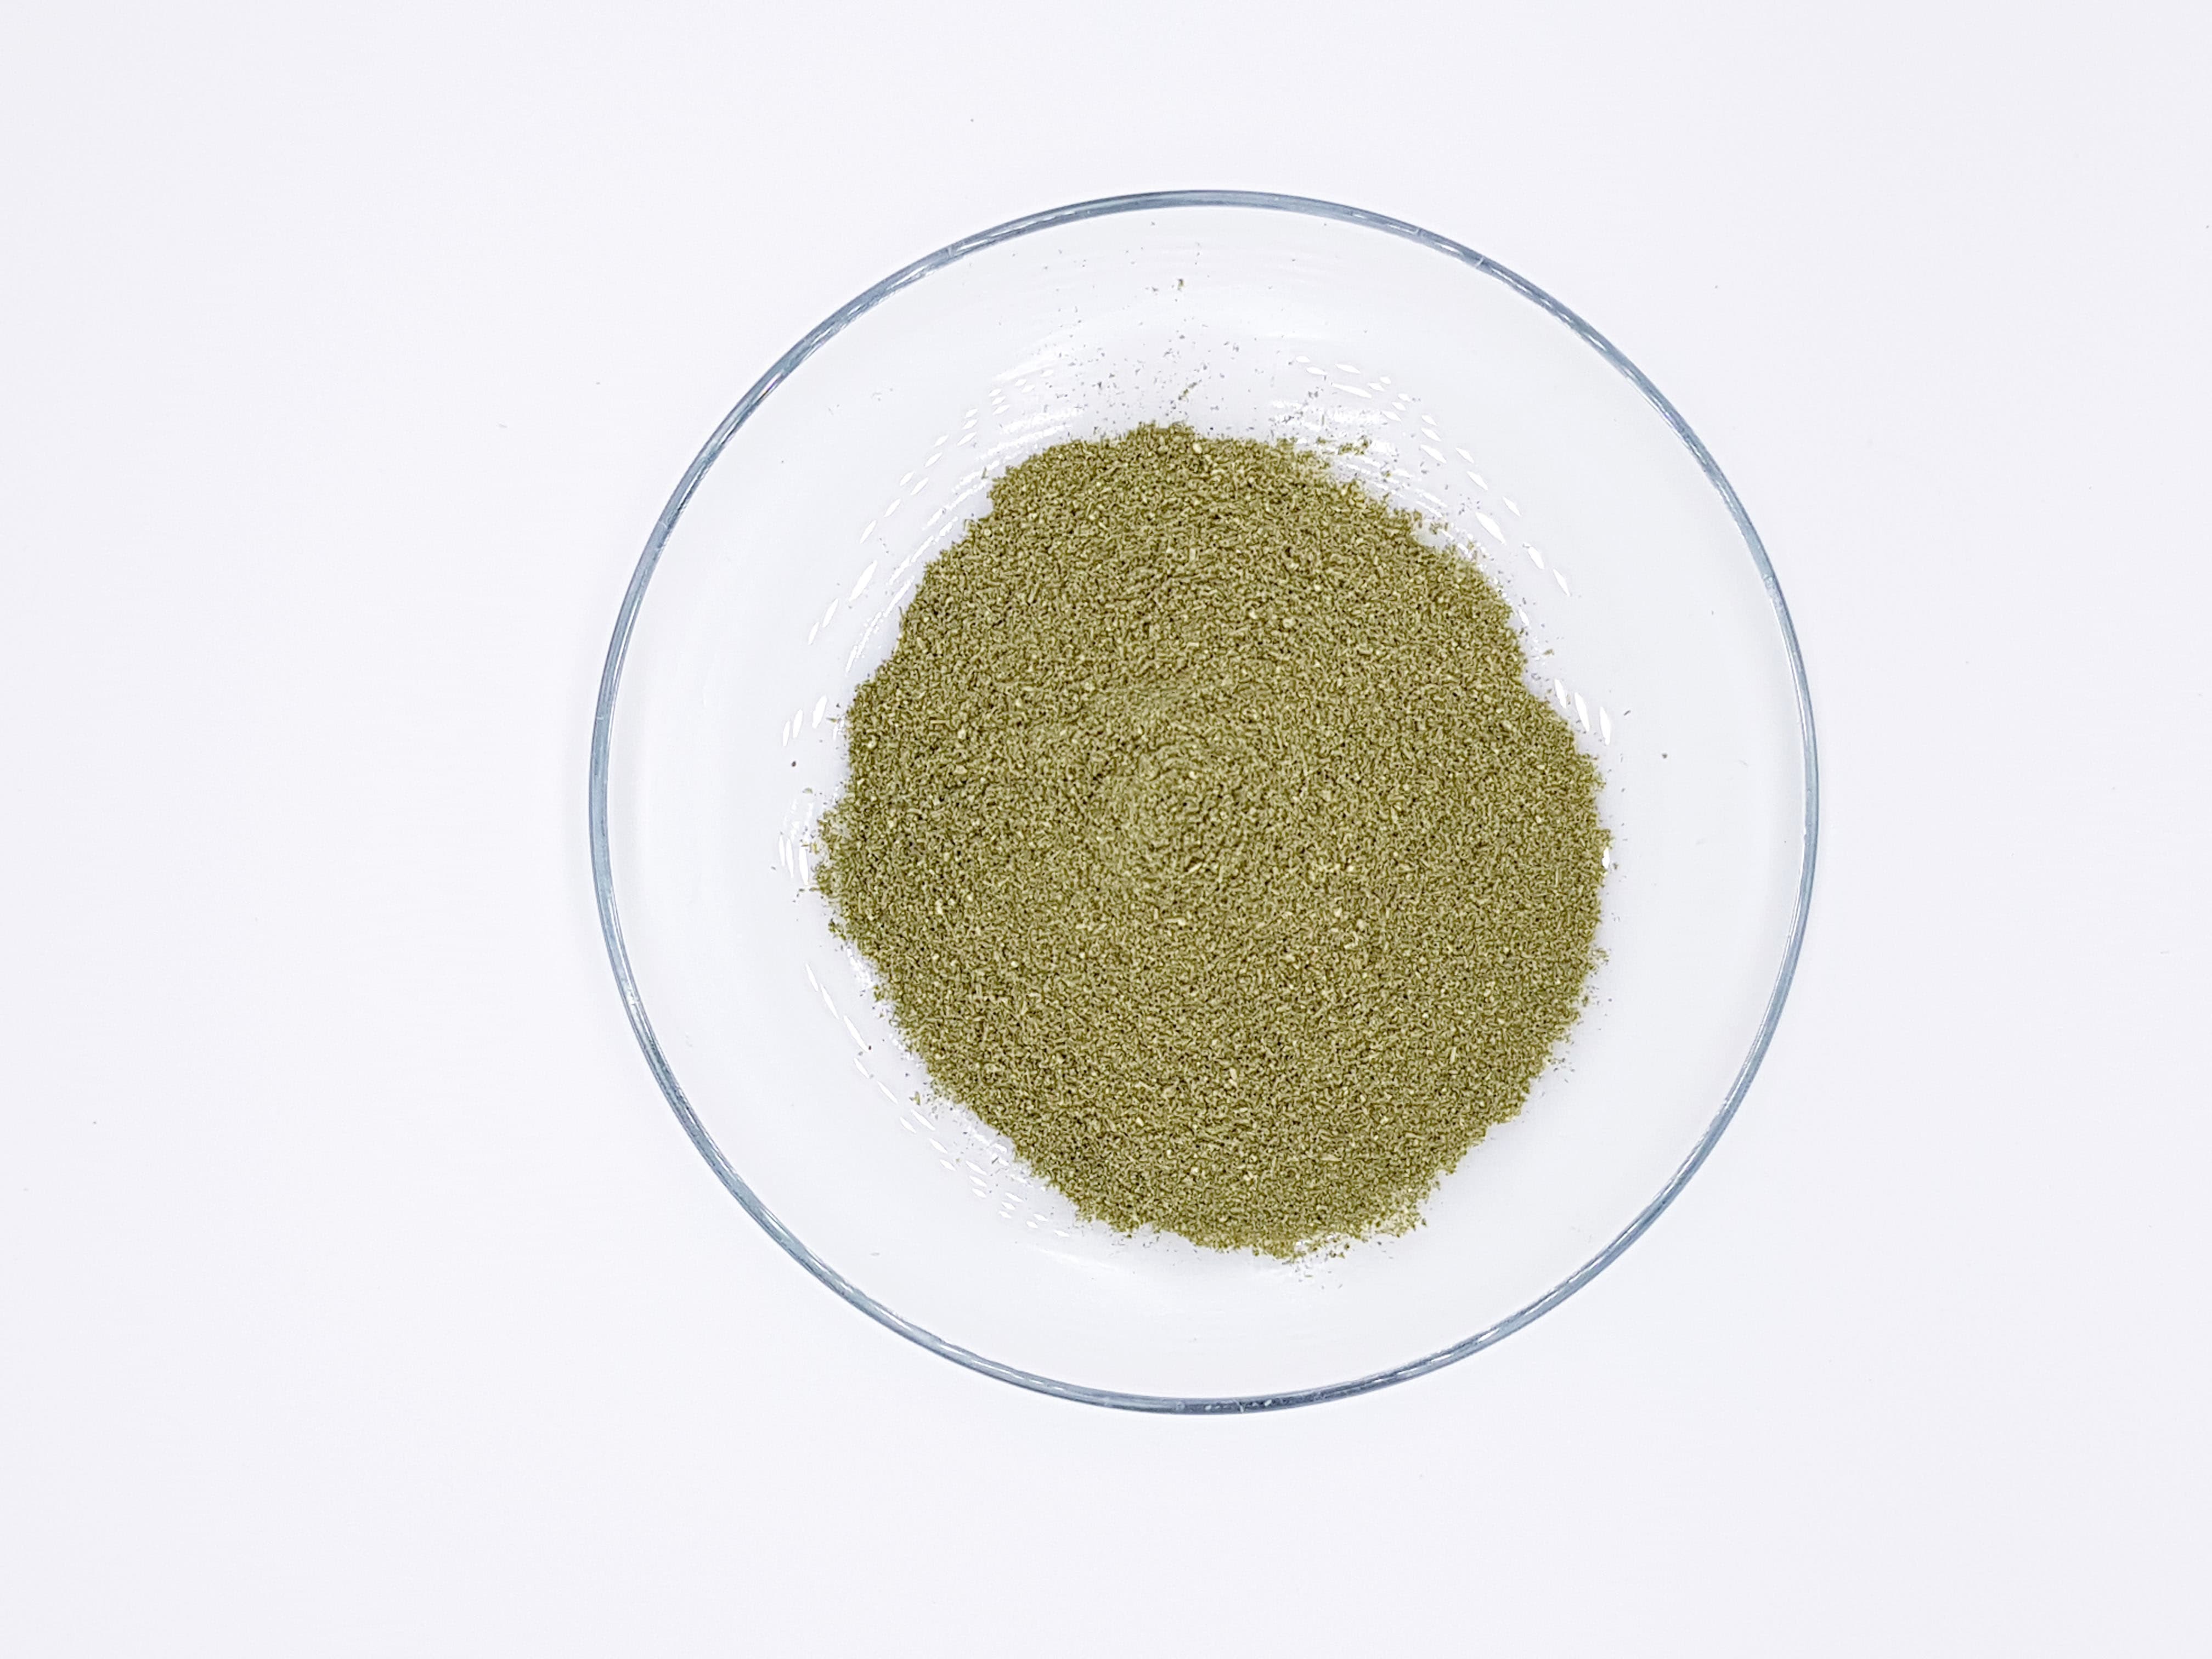 Powdered wild simulated ginseng